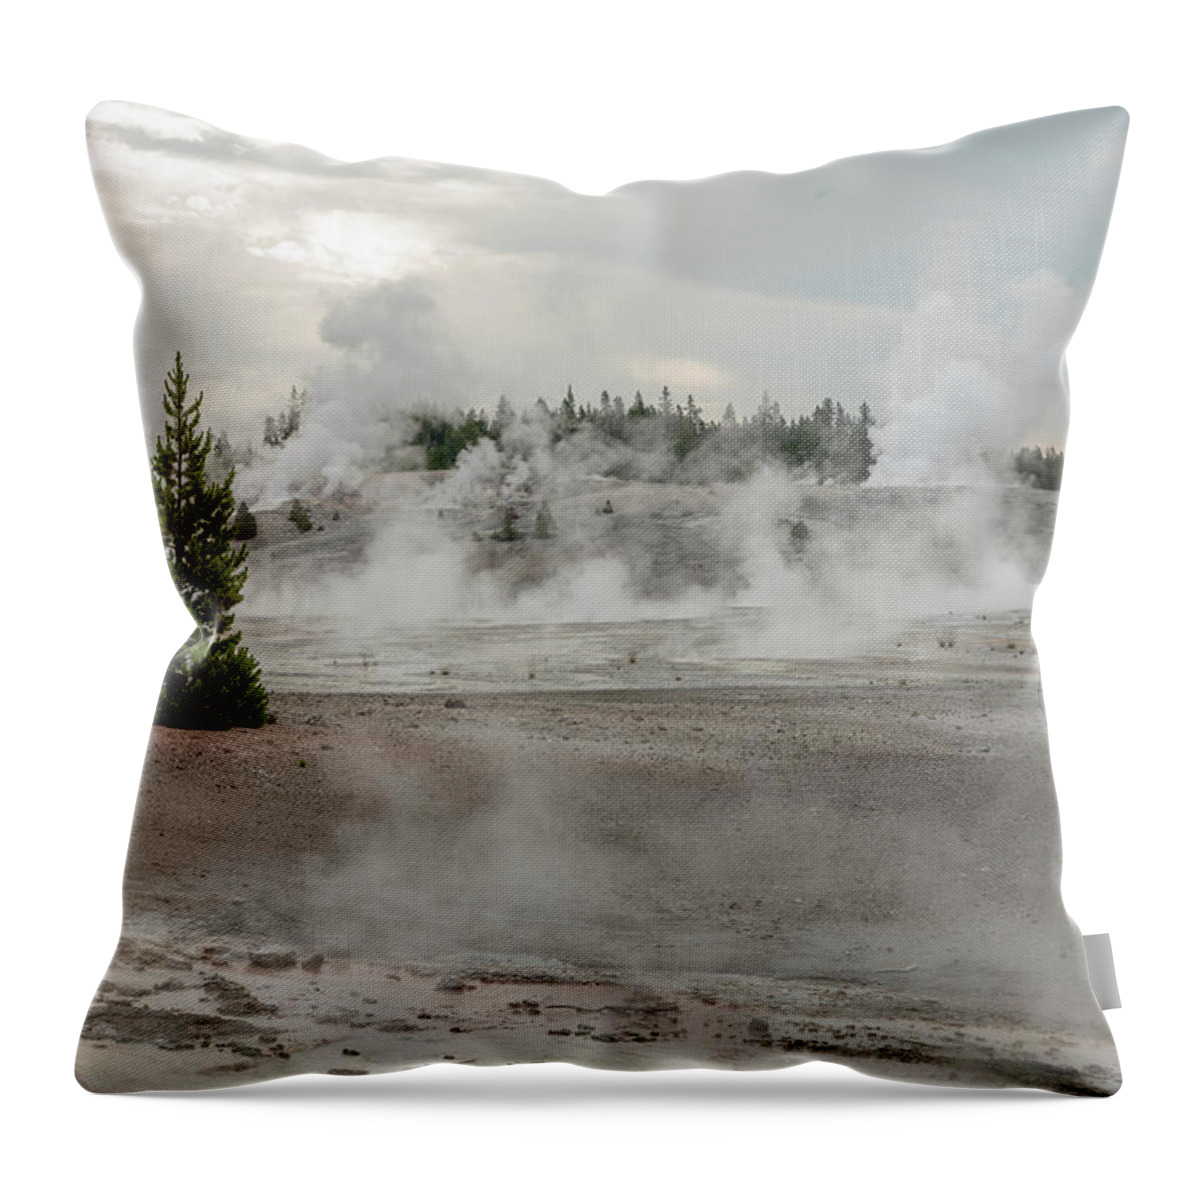 Yellowstone Throw Pillow featuring the photograph Essence of Yellowstone by Tara Krauss